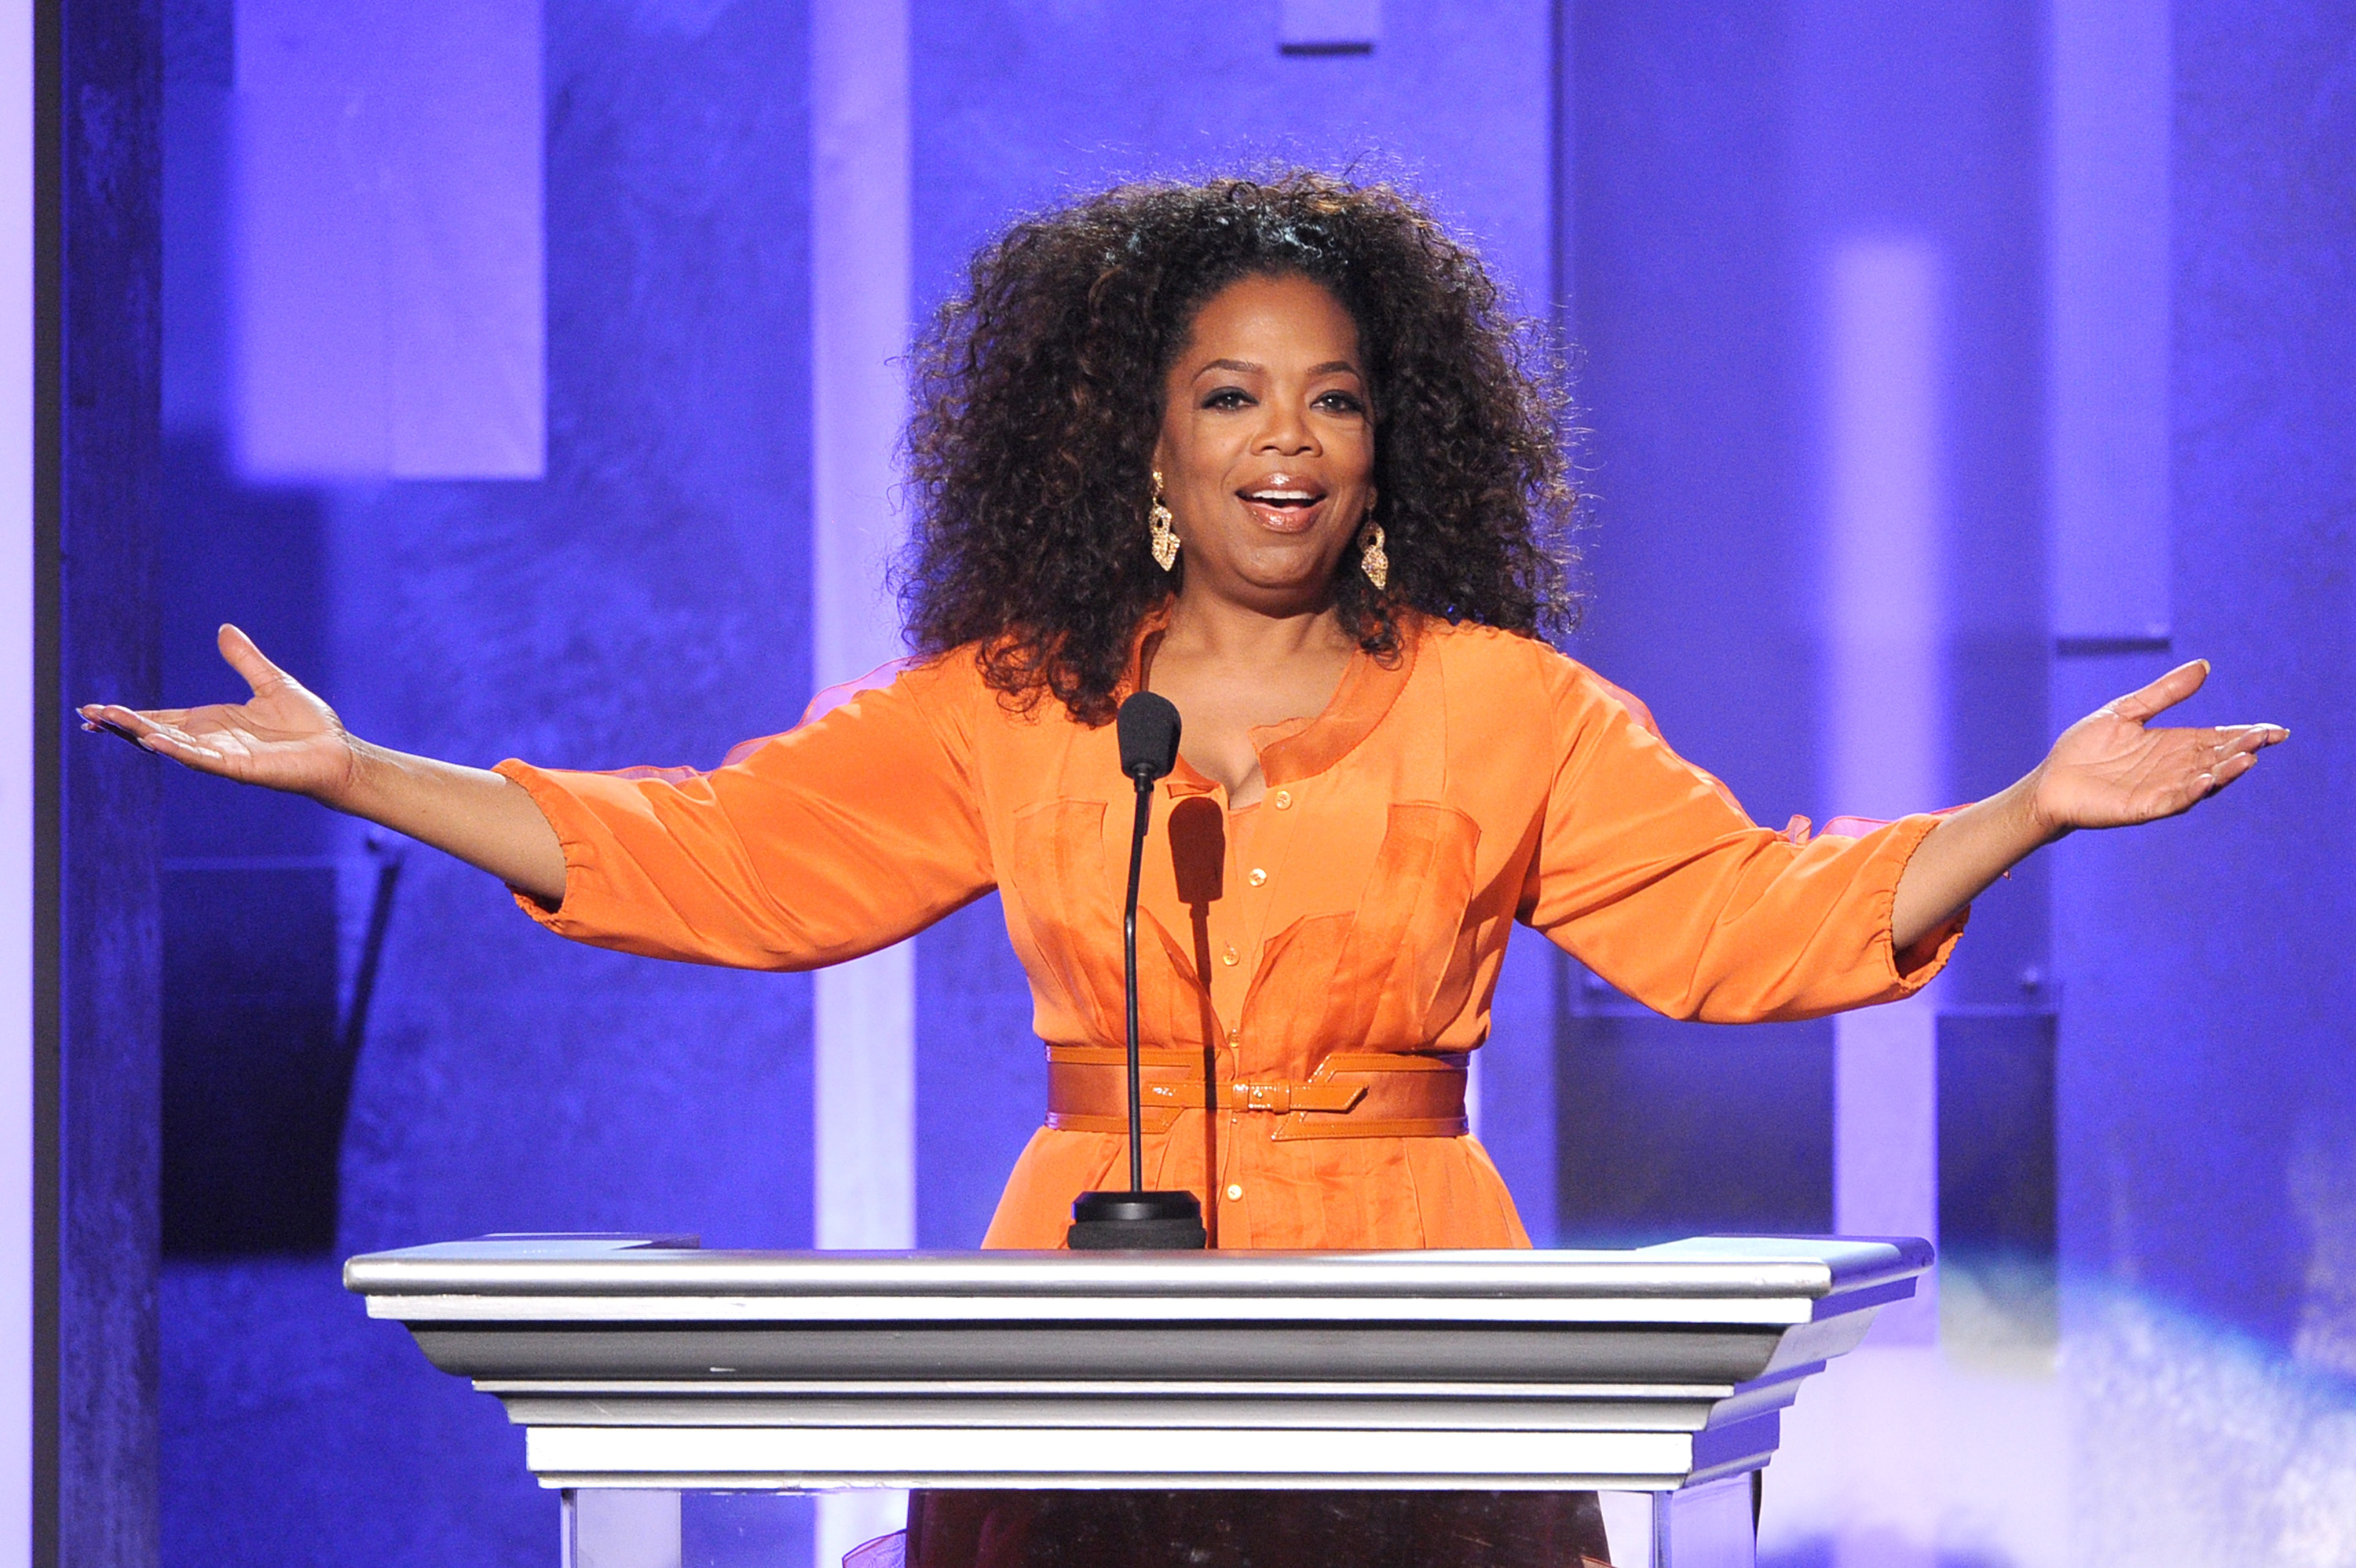 Oprah raising her hands